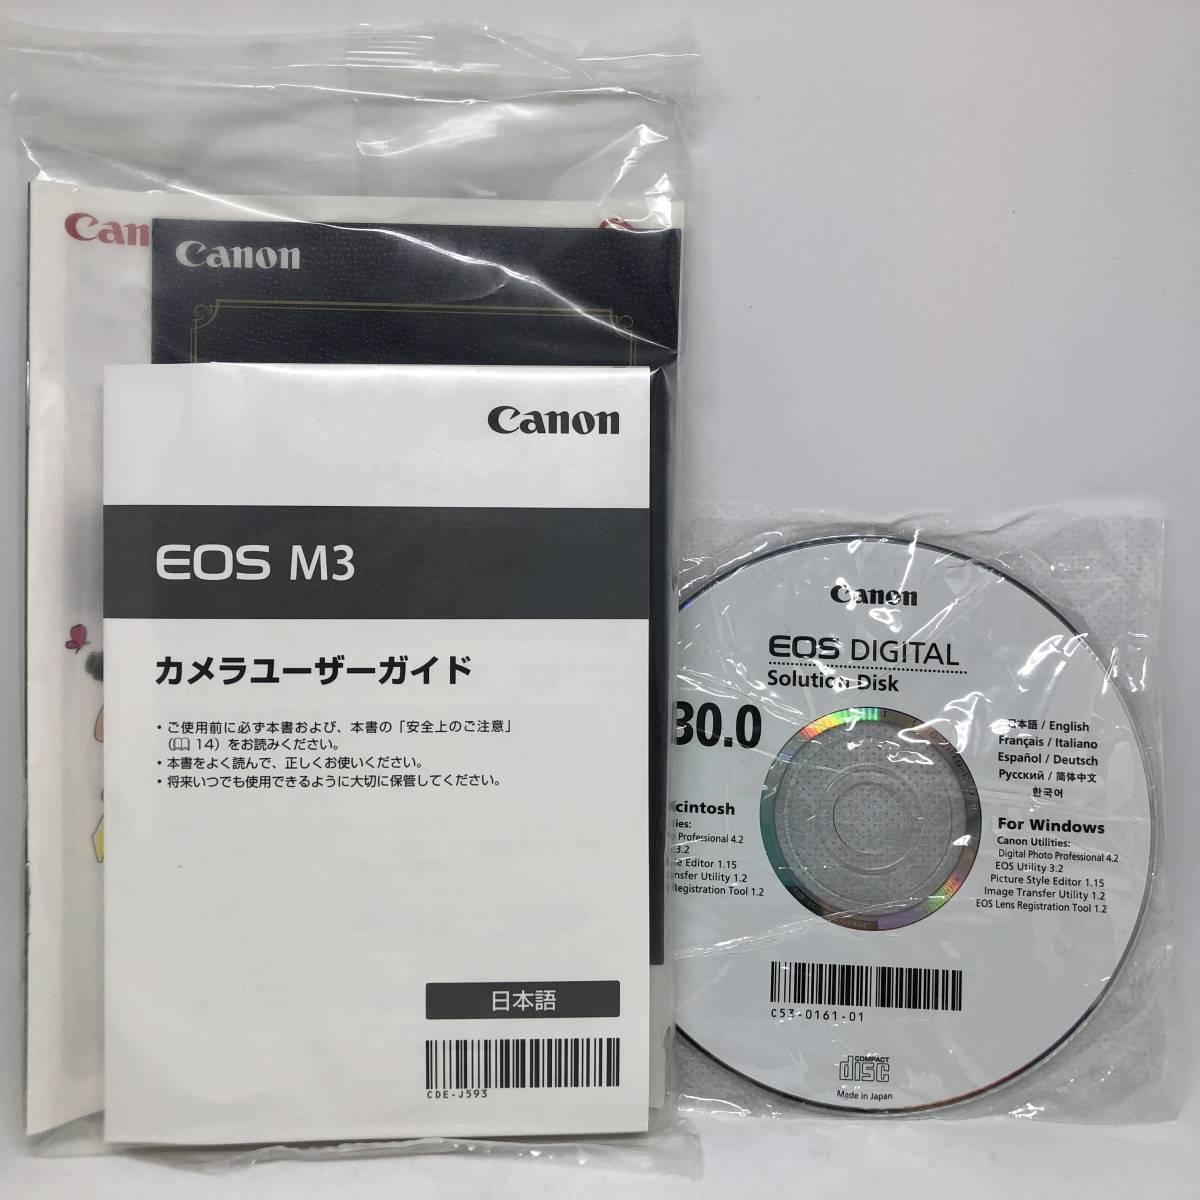 Canon Canon EOS M3 instructions manual manual #M1450